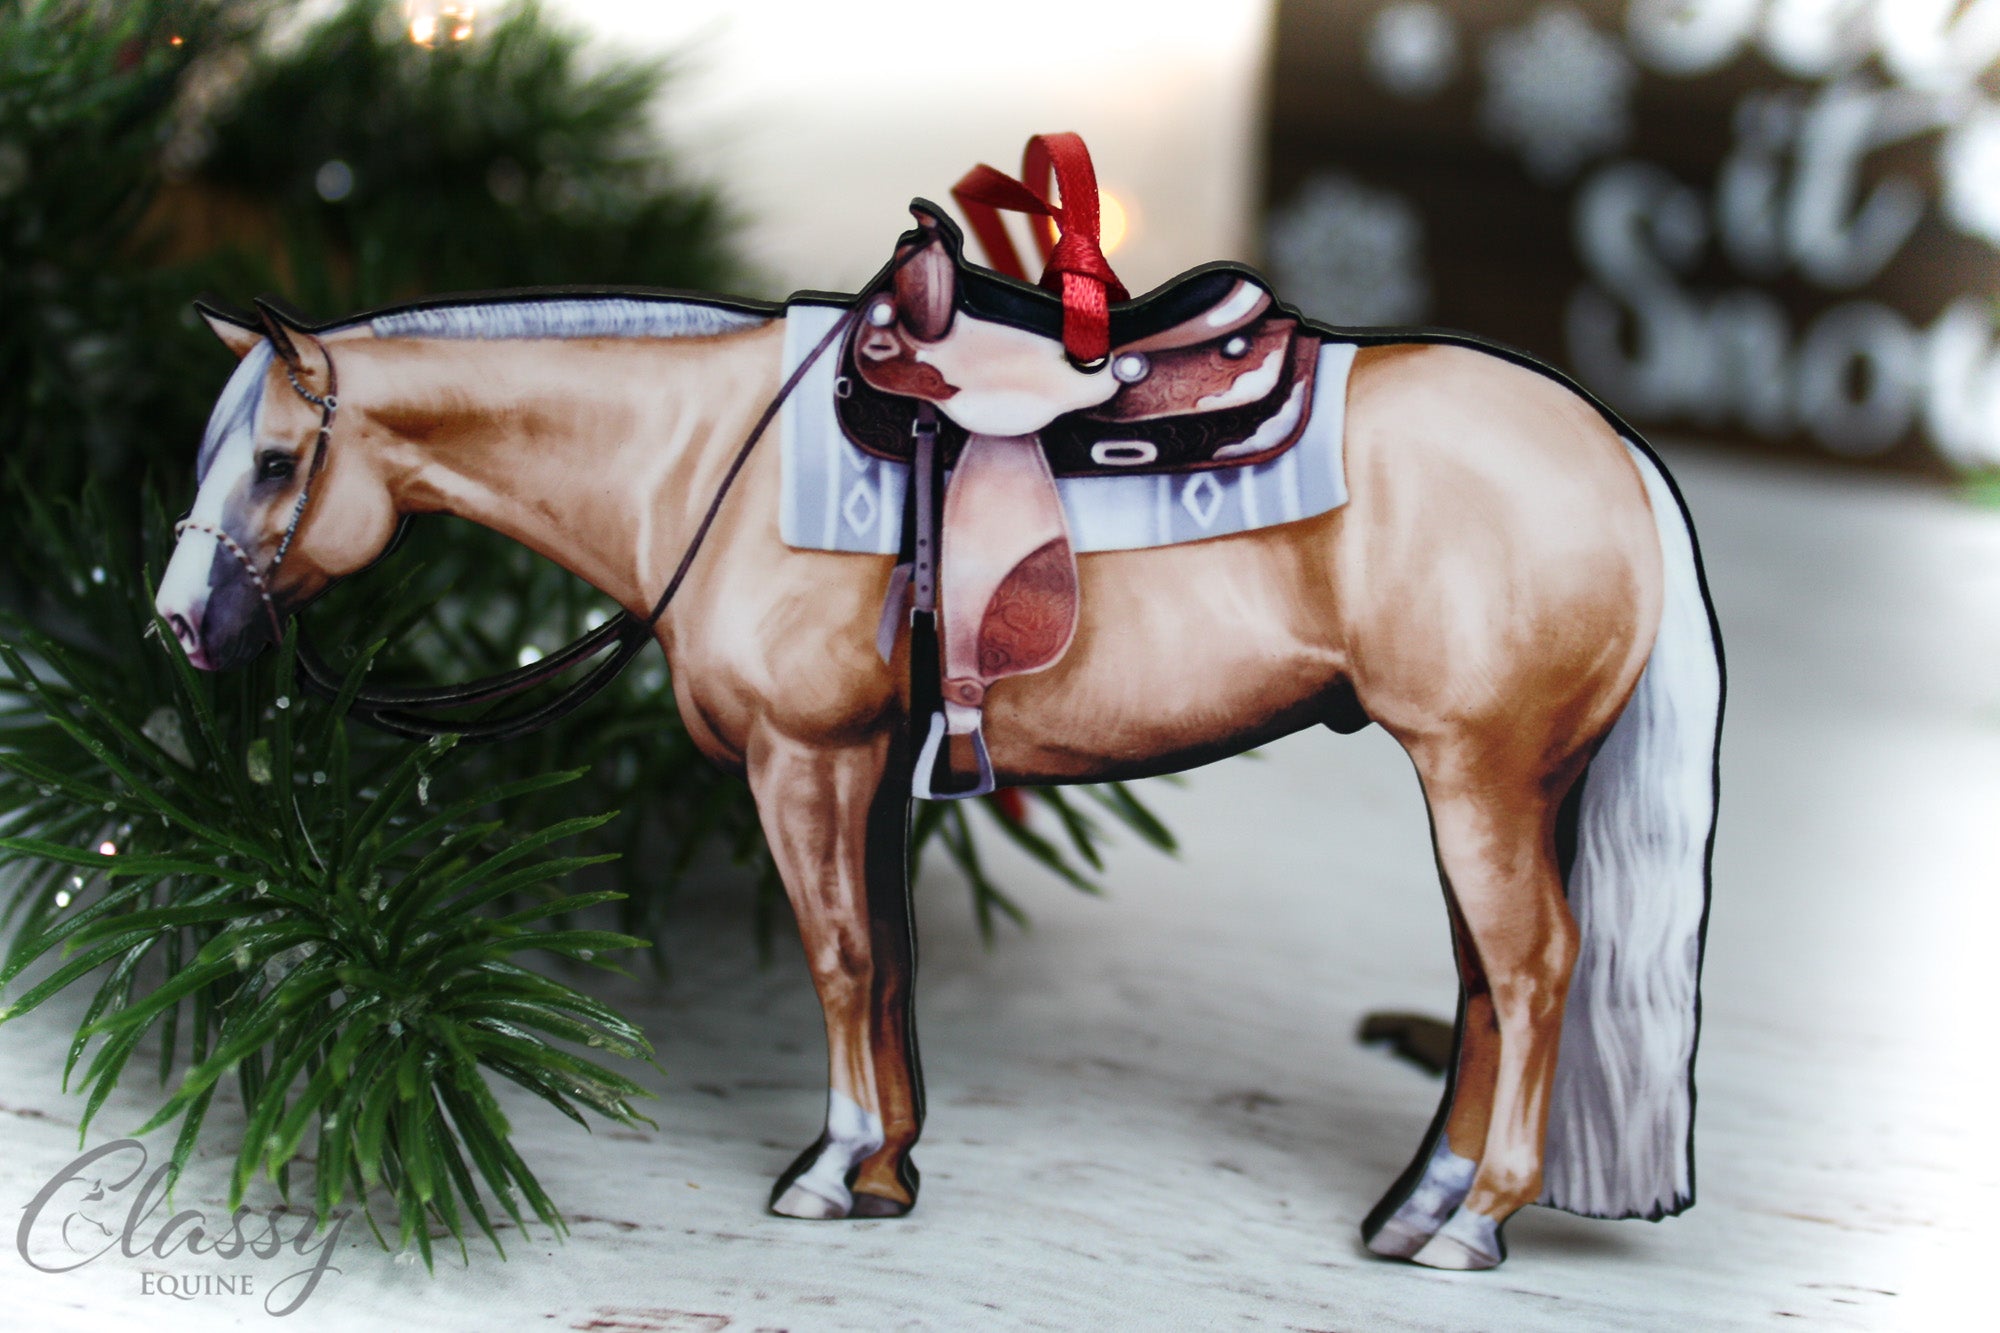 palomino horses with saddles